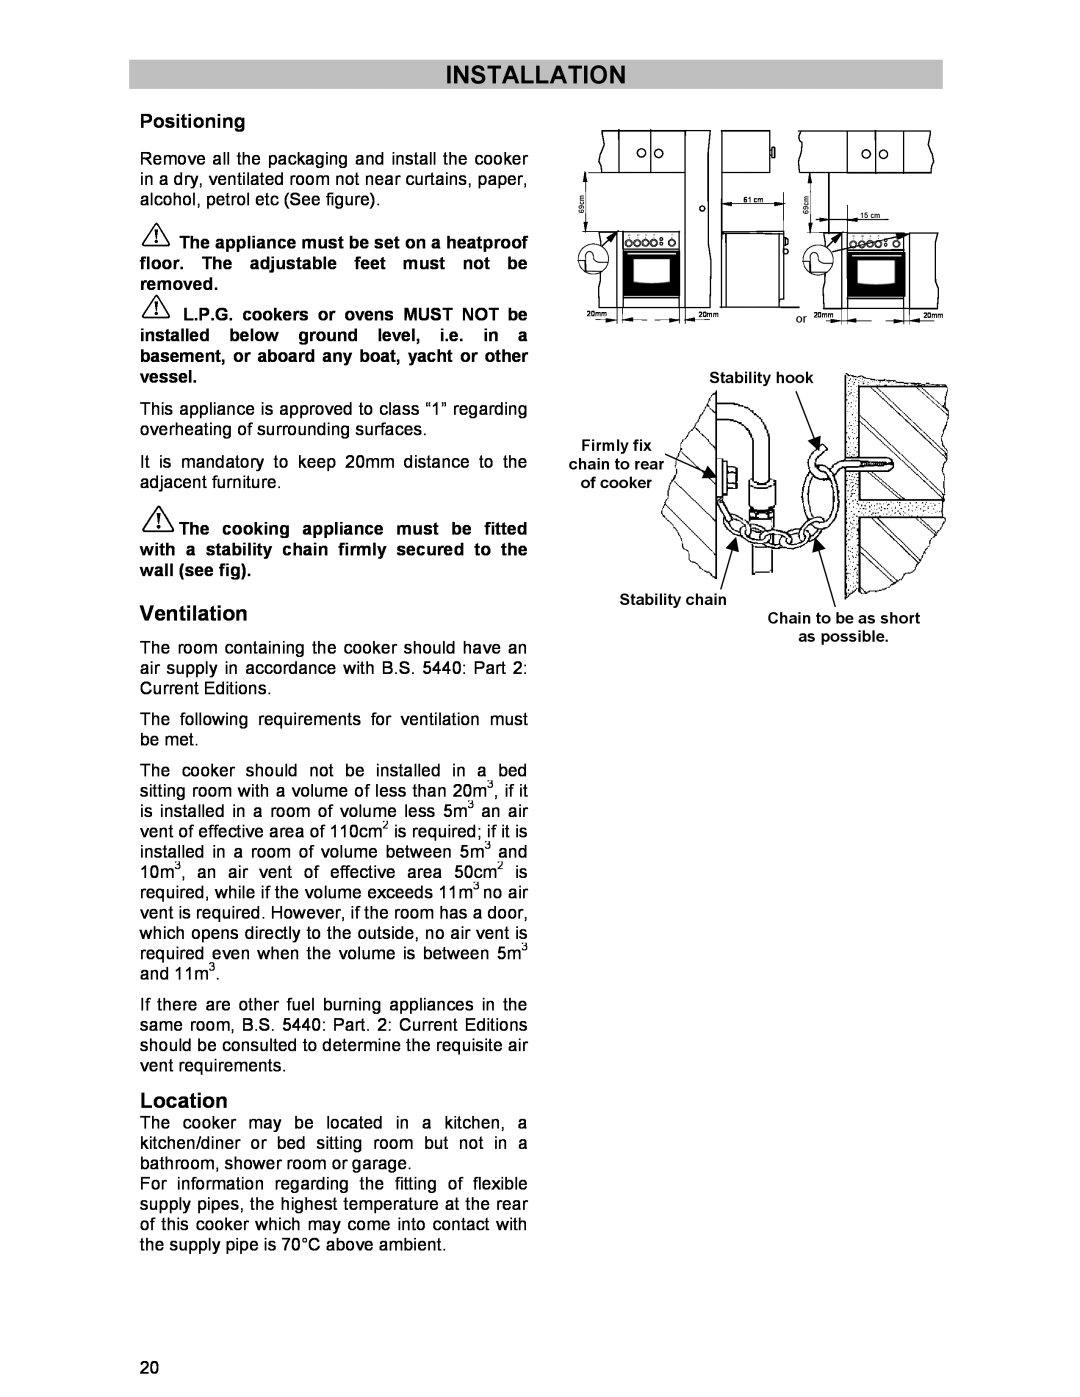 Electrolux SIG 233 manual Installation, Ventilation, Location, Positioning 